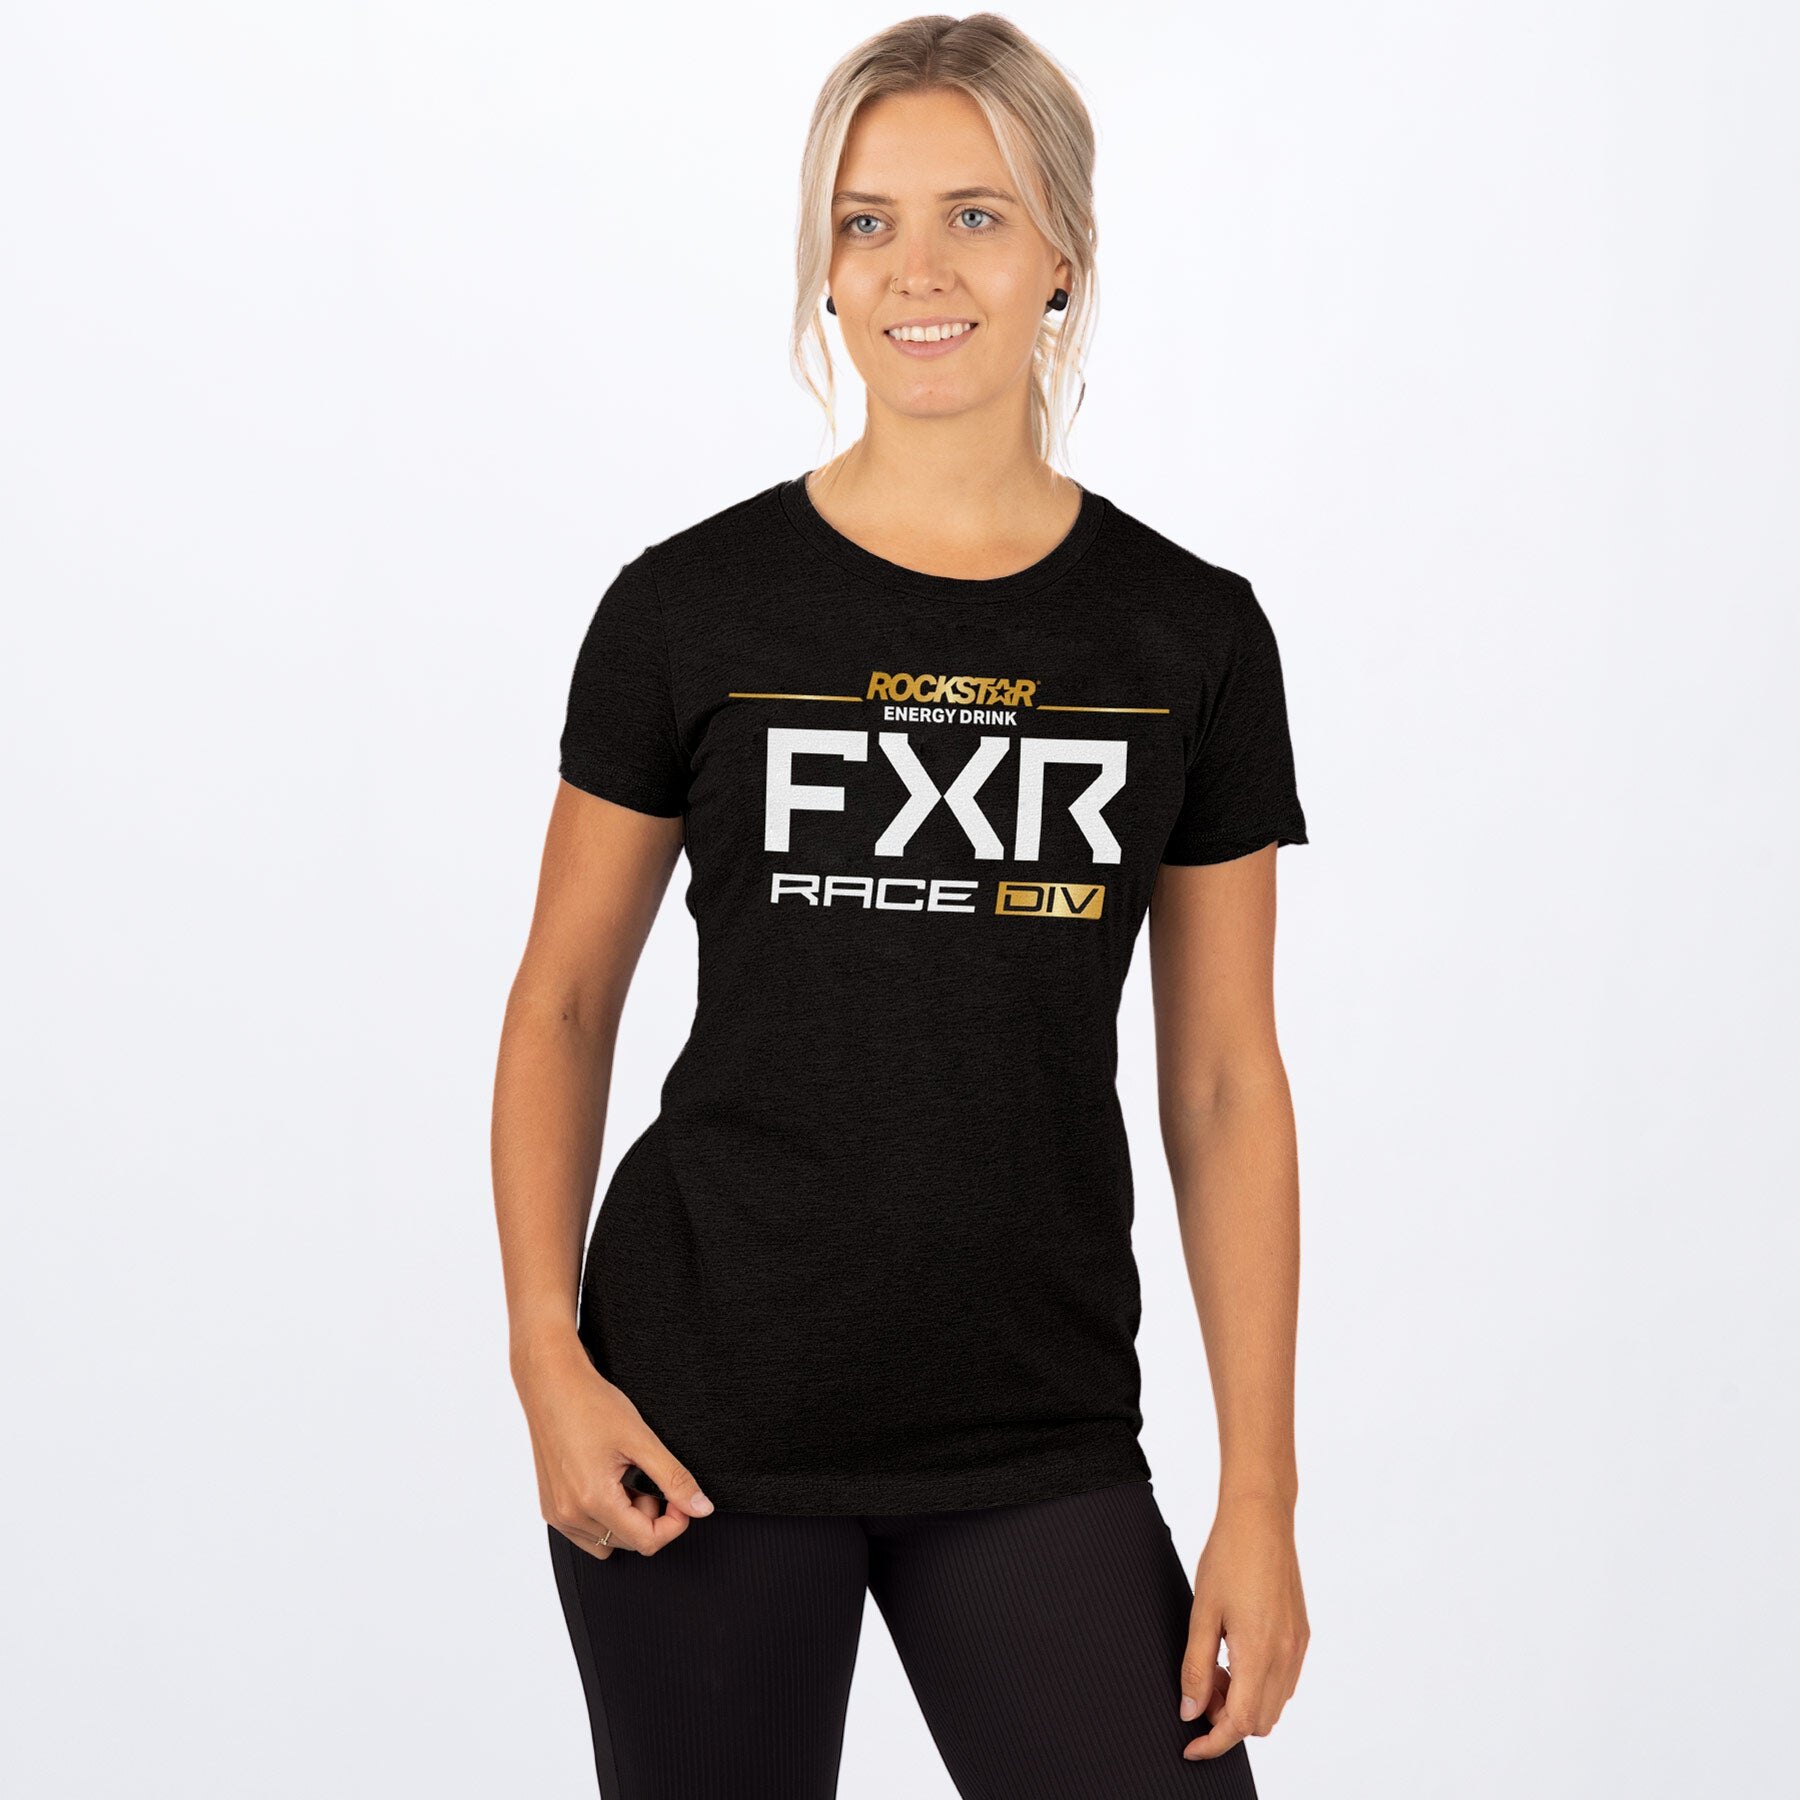 Women's Race Div T Shirt XS Grey Heather/Sky Blue